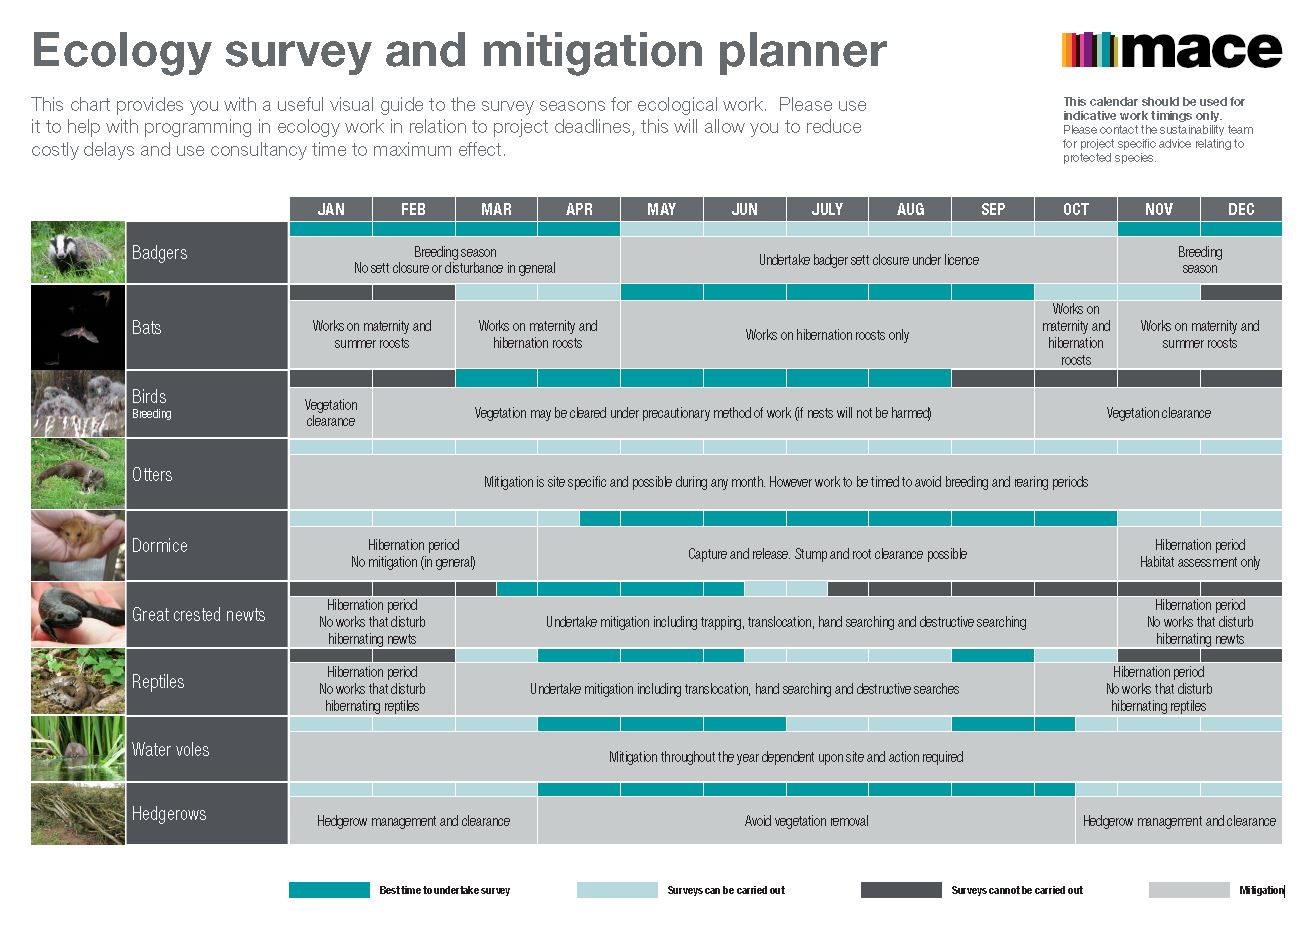 Ecology Survey and Mitigation Planner Best Practice Hub